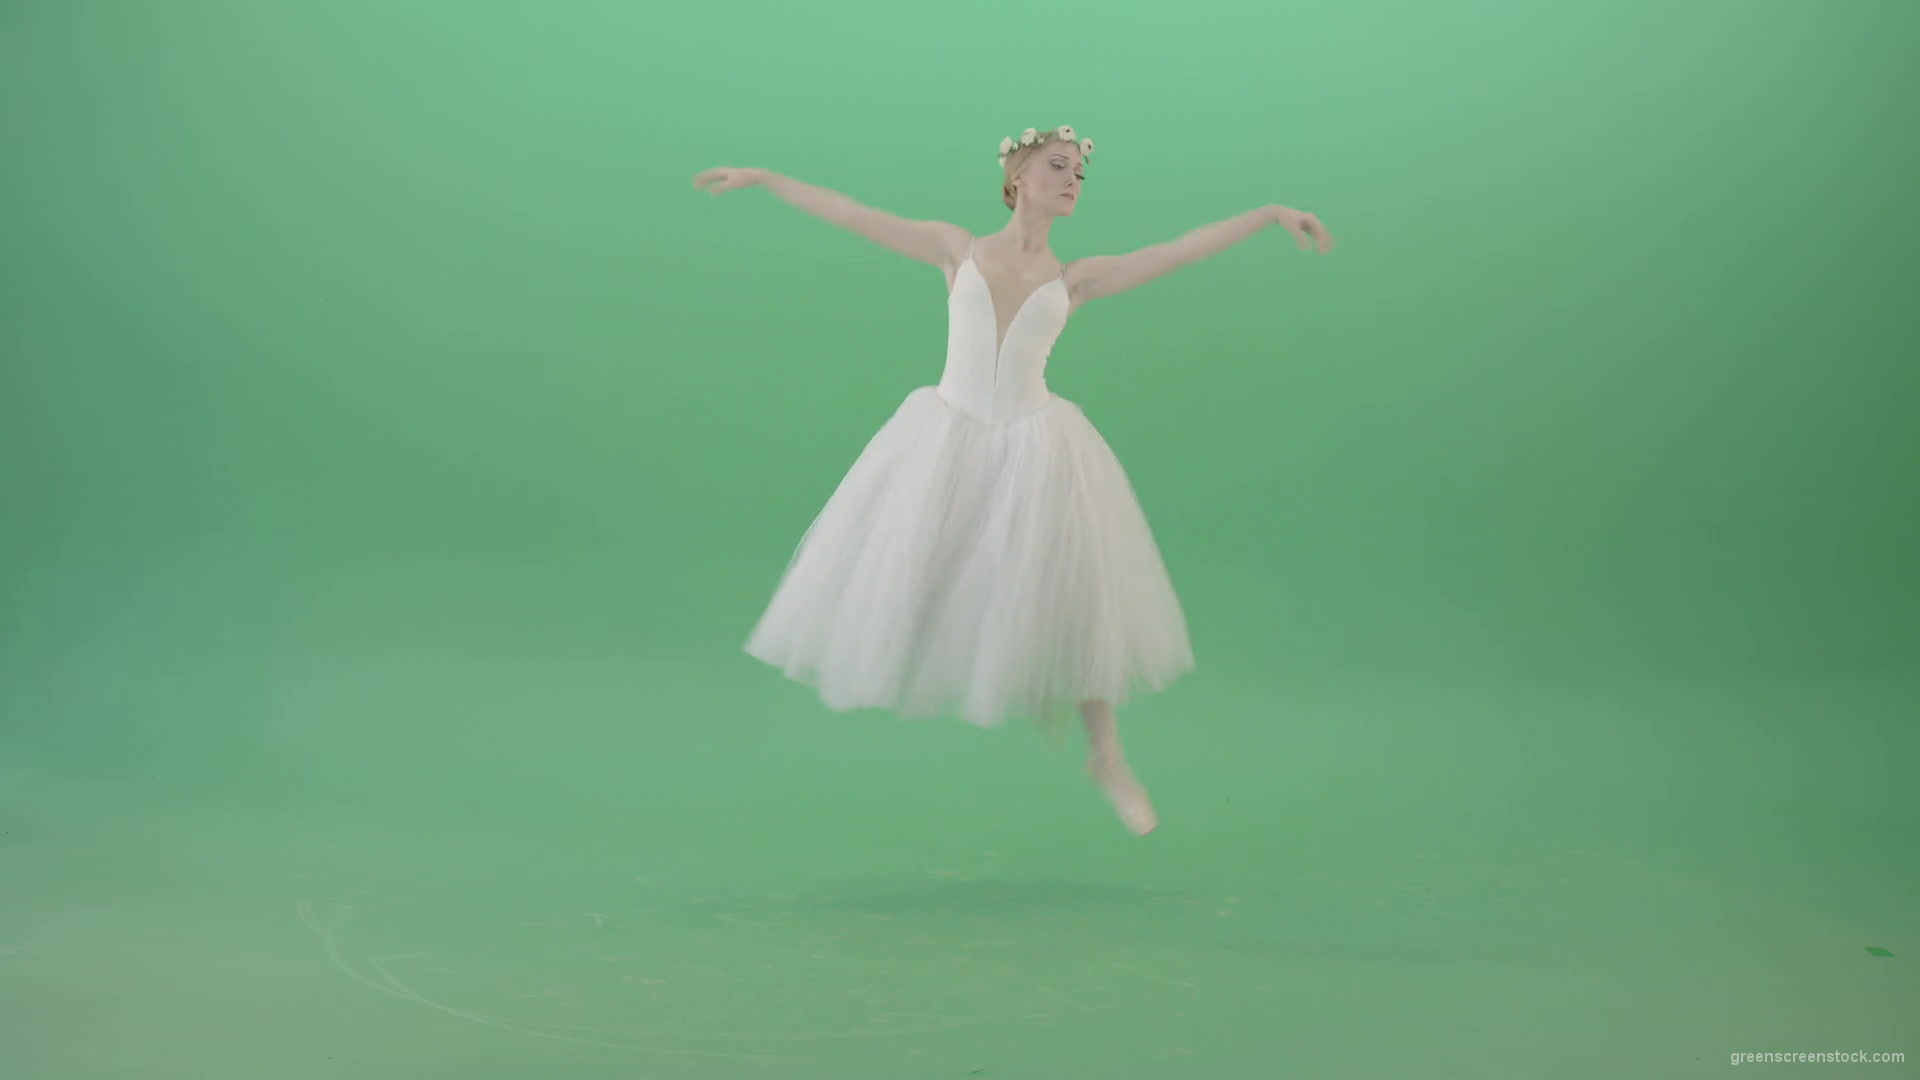 Beautiful-jumping-ballet-dancing-girl-choreograph-jumps-on-green-screen-4K-Video-Footage-1920_006 Green Screen Stock